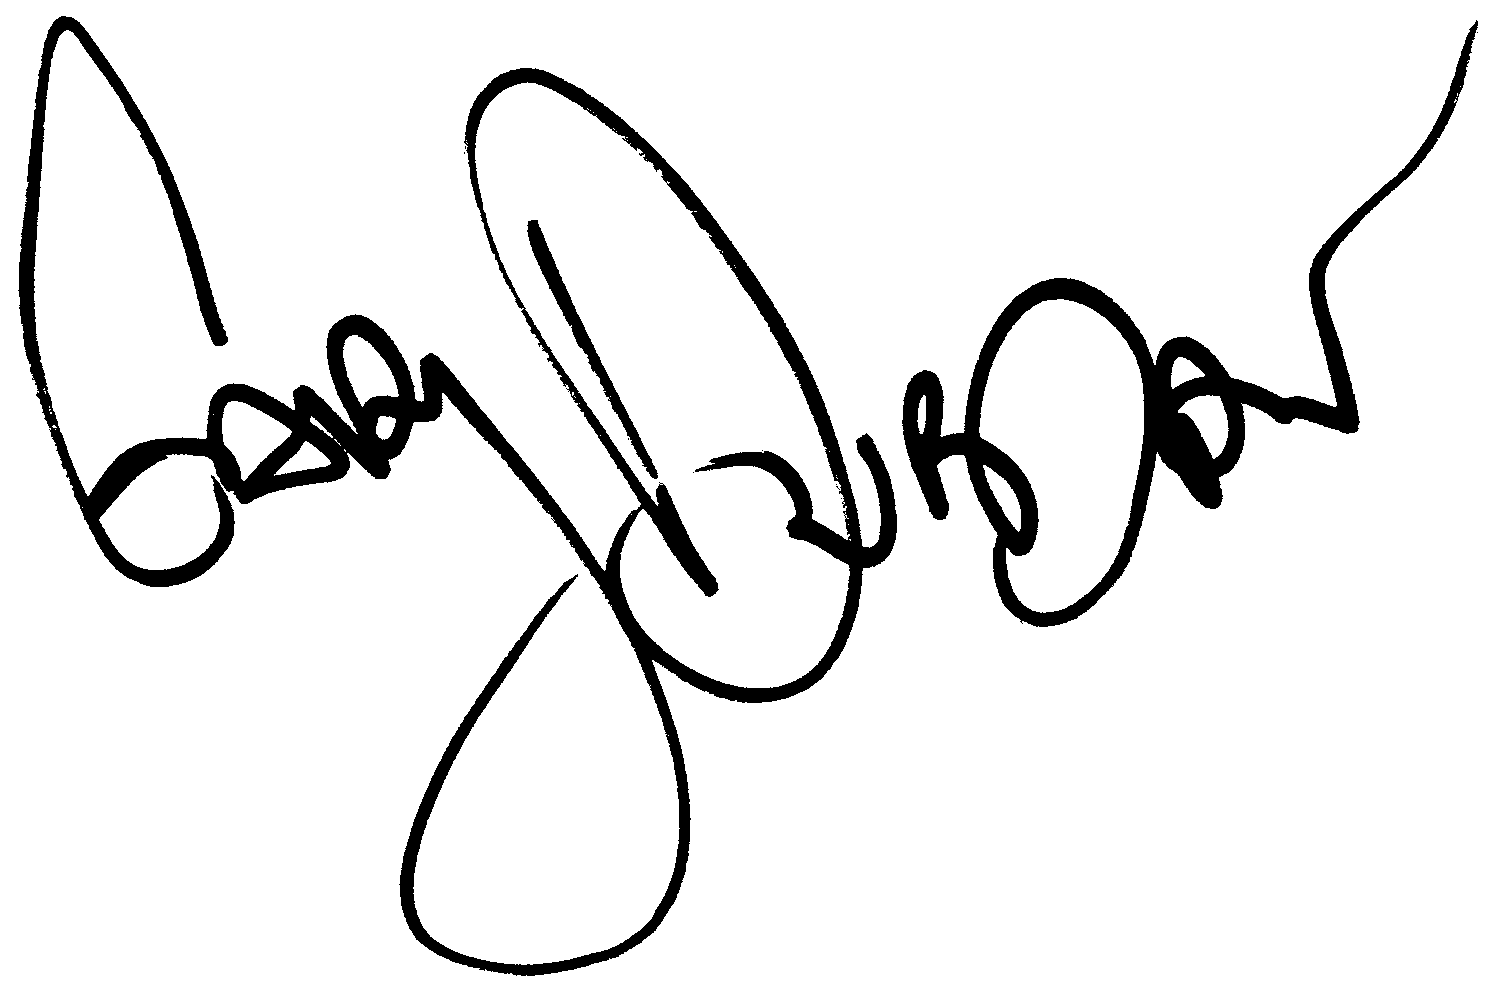 Gary Dourdan autograph facsimile